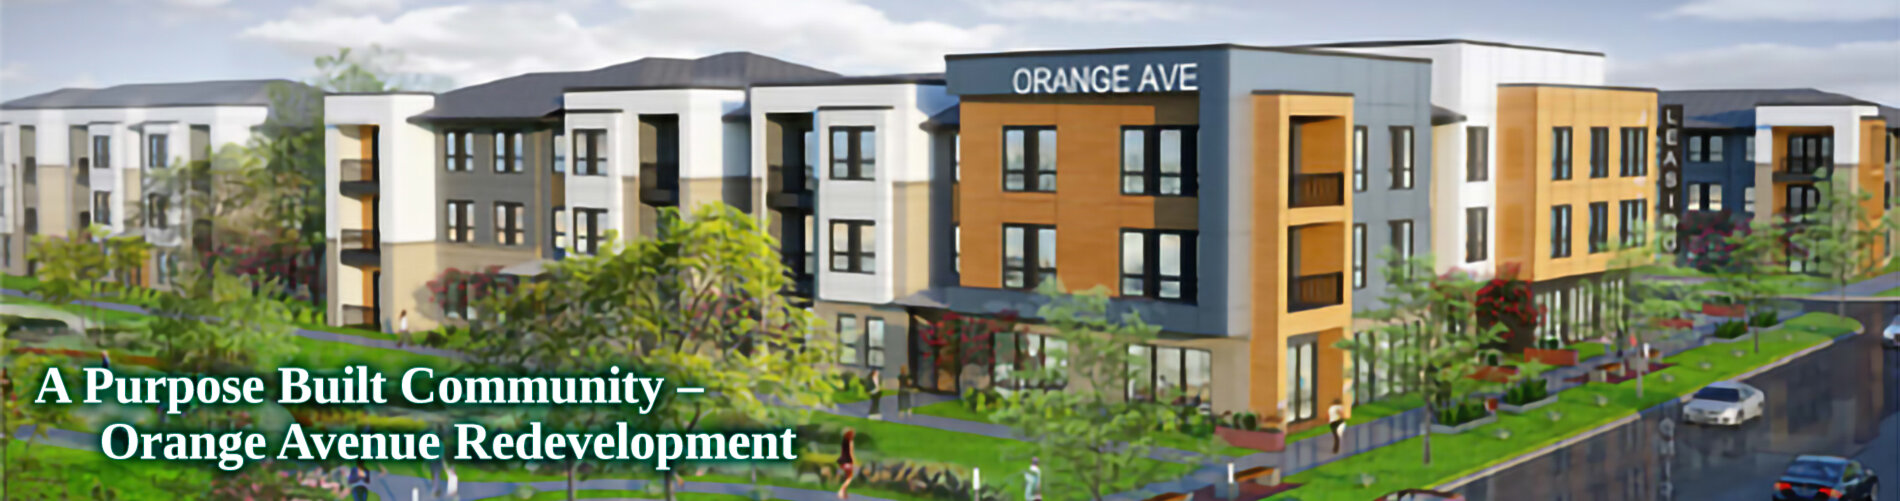 Artist rendering of new Orange Avenue Redevelopment